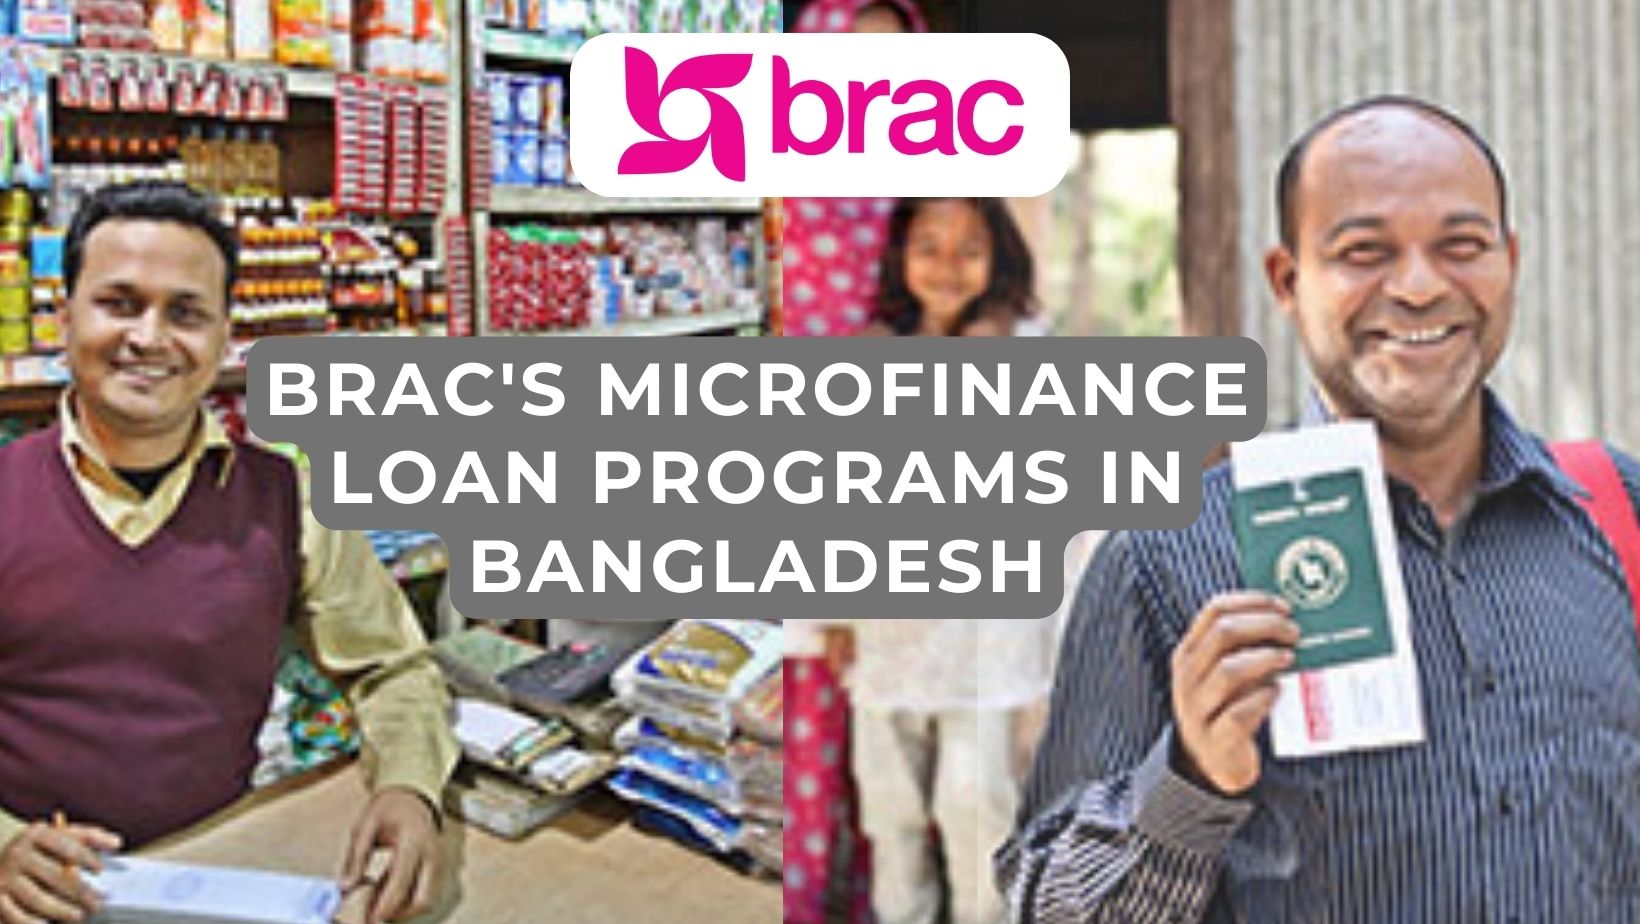 BRAC's Microfinance Loan programs in Bangladesh